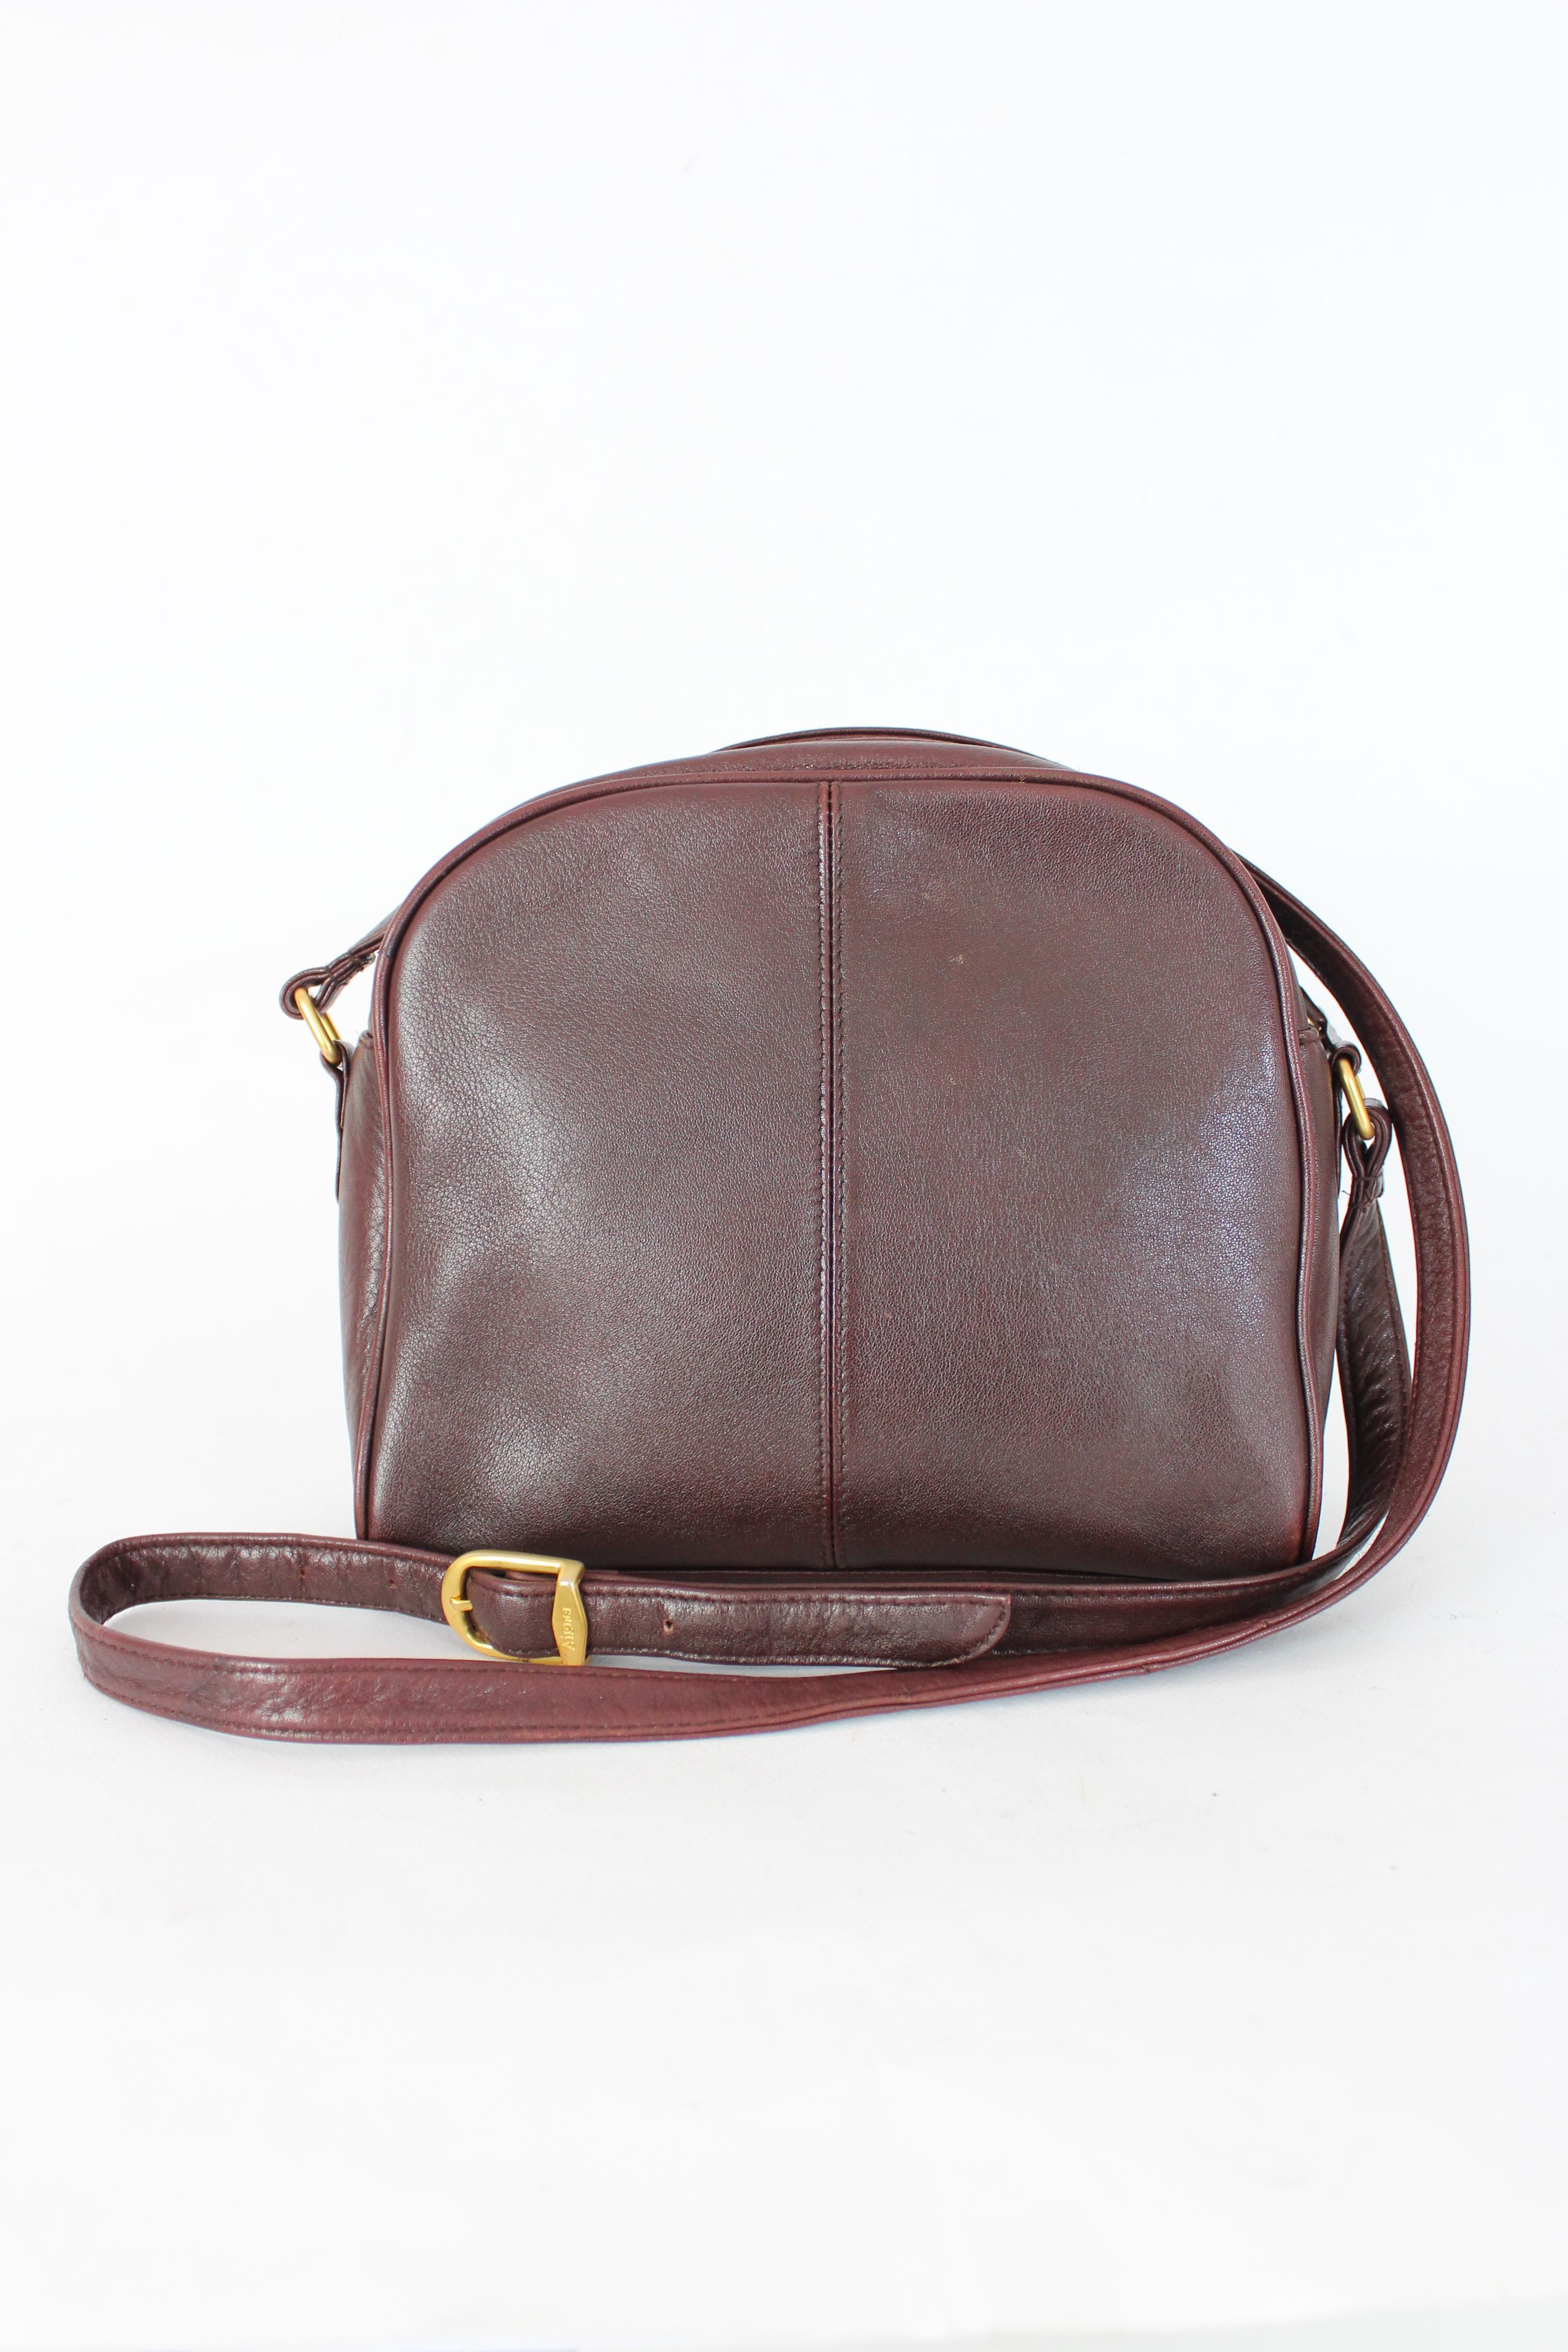 etienne aigner genuine leather purse